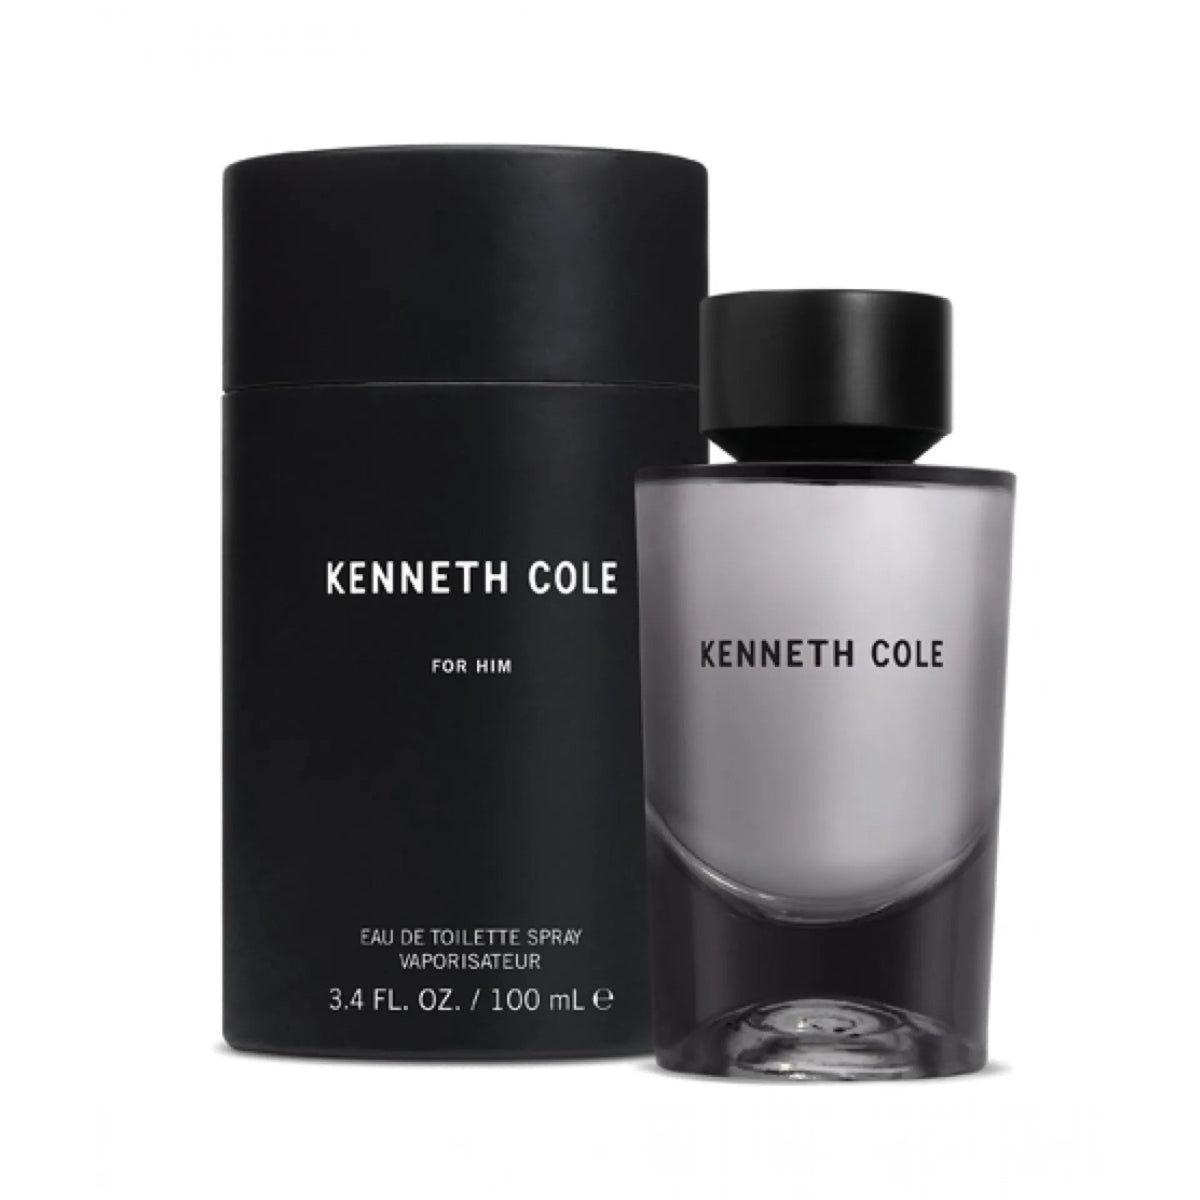 KENNETH COLE HIM EDT 100ML (NEW) - Makeup Stash Pakistan - Kenneth Cole